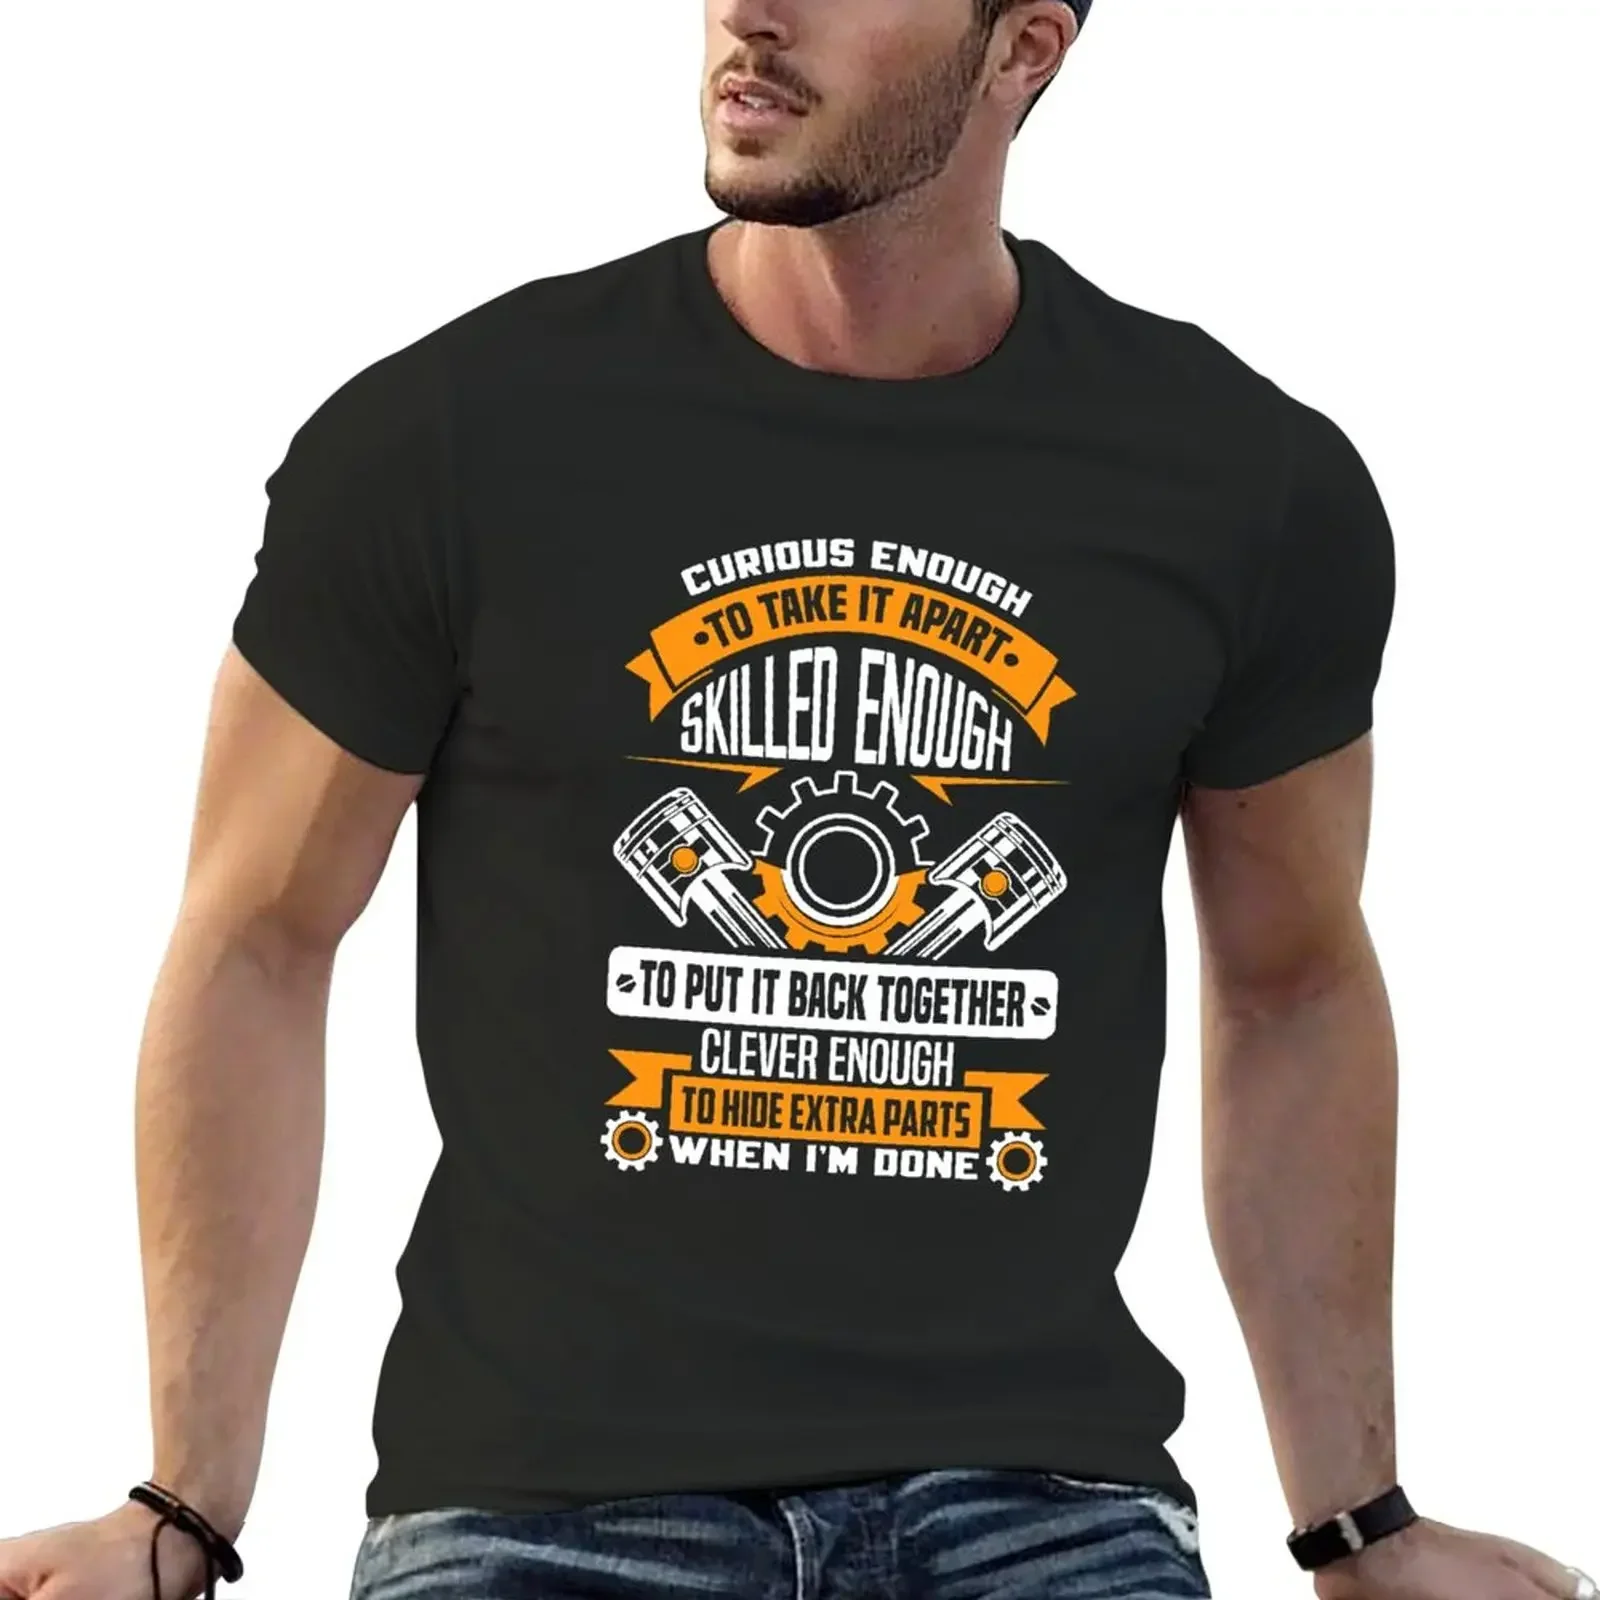 

Curious enough to take it apart skilled enough - mechanic T-Shirt tops summer tops men workout shirt